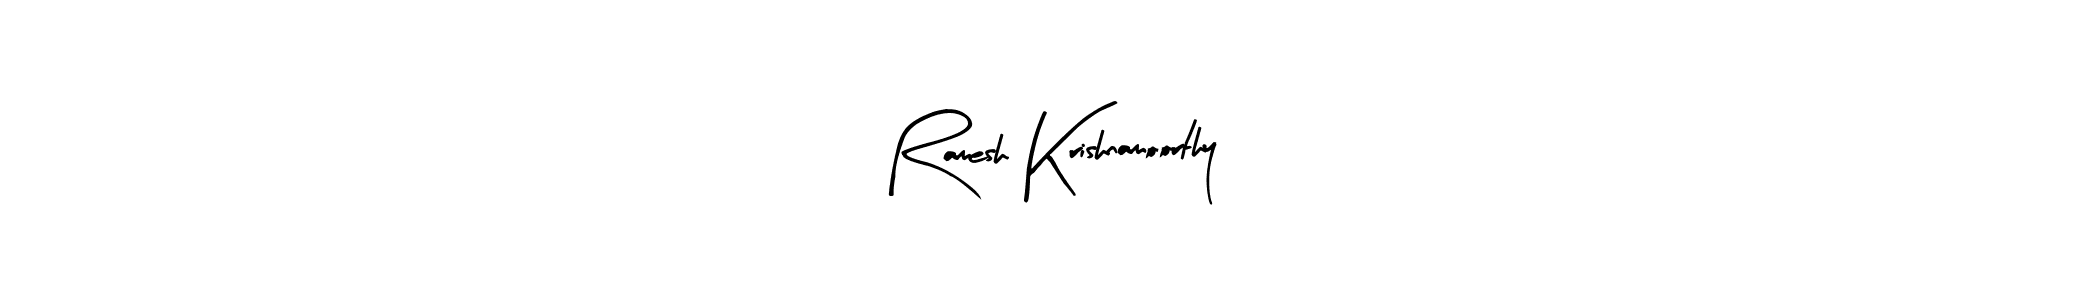 How to Draw Ramesh Krishnamoorthy signature style? Arty Signature is a latest design signature styles for name Ramesh Krishnamoorthy. Ramesh Krishnamoorthy signature style 8 images and pictures png